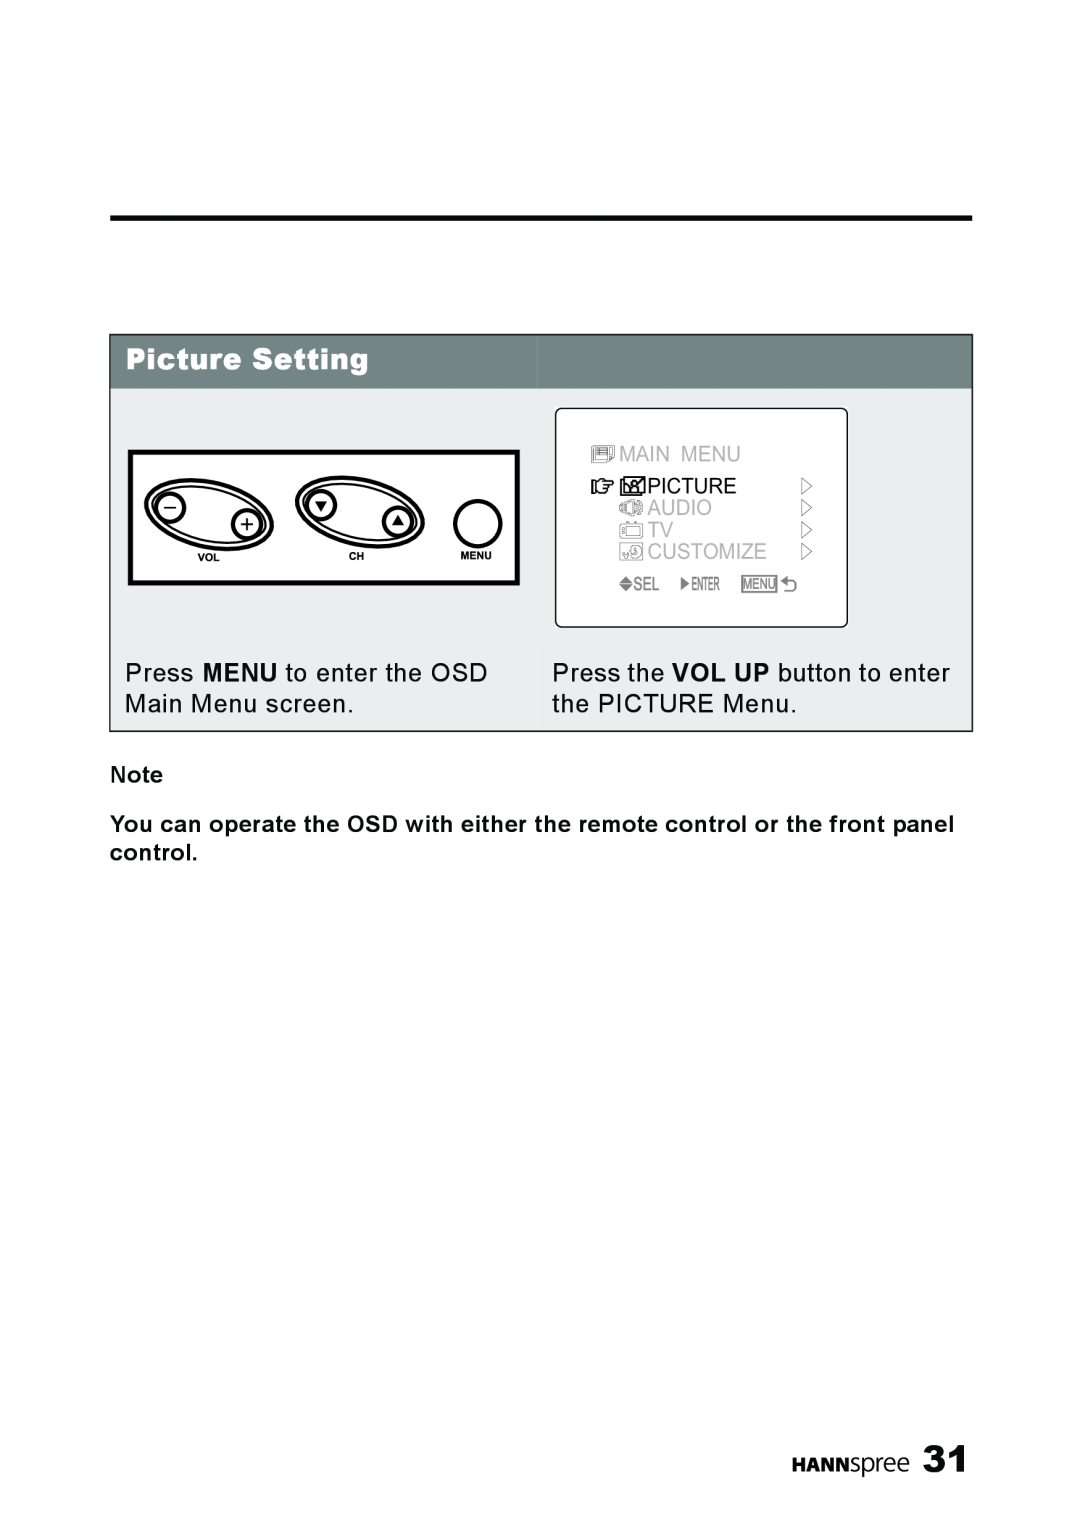 HANNspree ST09-10A1 user manual Picture Setting, Press MENU to enter the OSD Main Menu screen, Sel Enter 